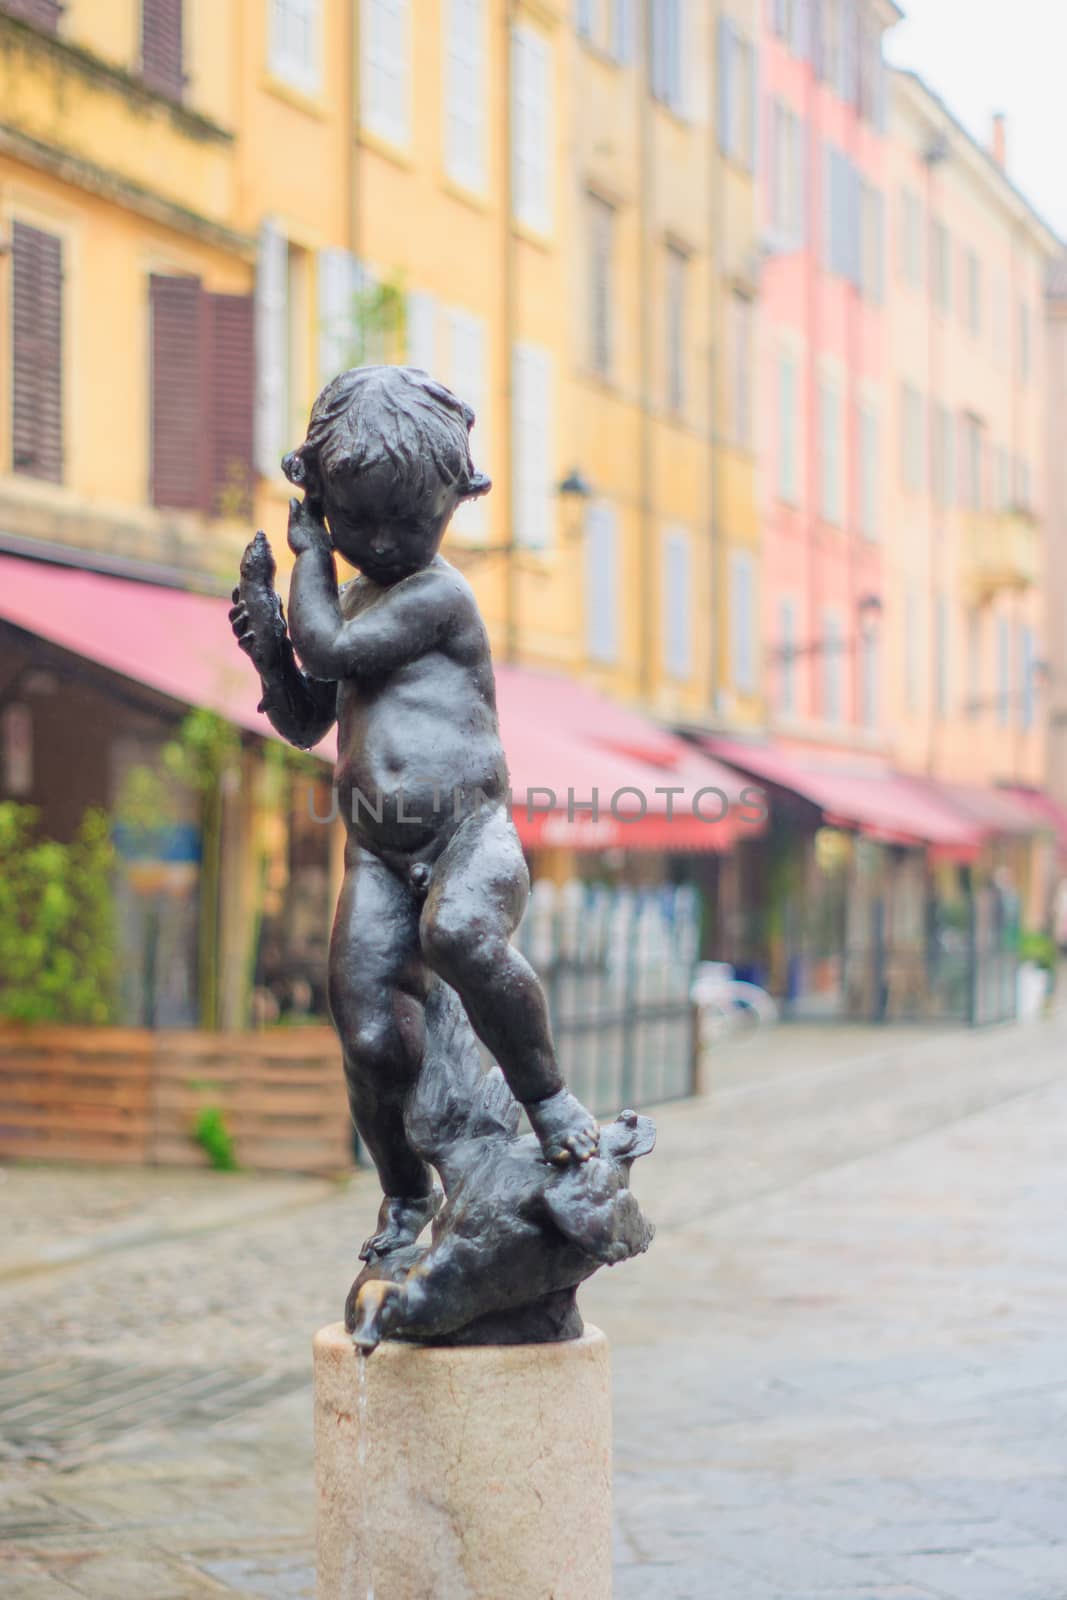 Statue and street scene in the historic center of Modena, Emilia-Romagna, Italy